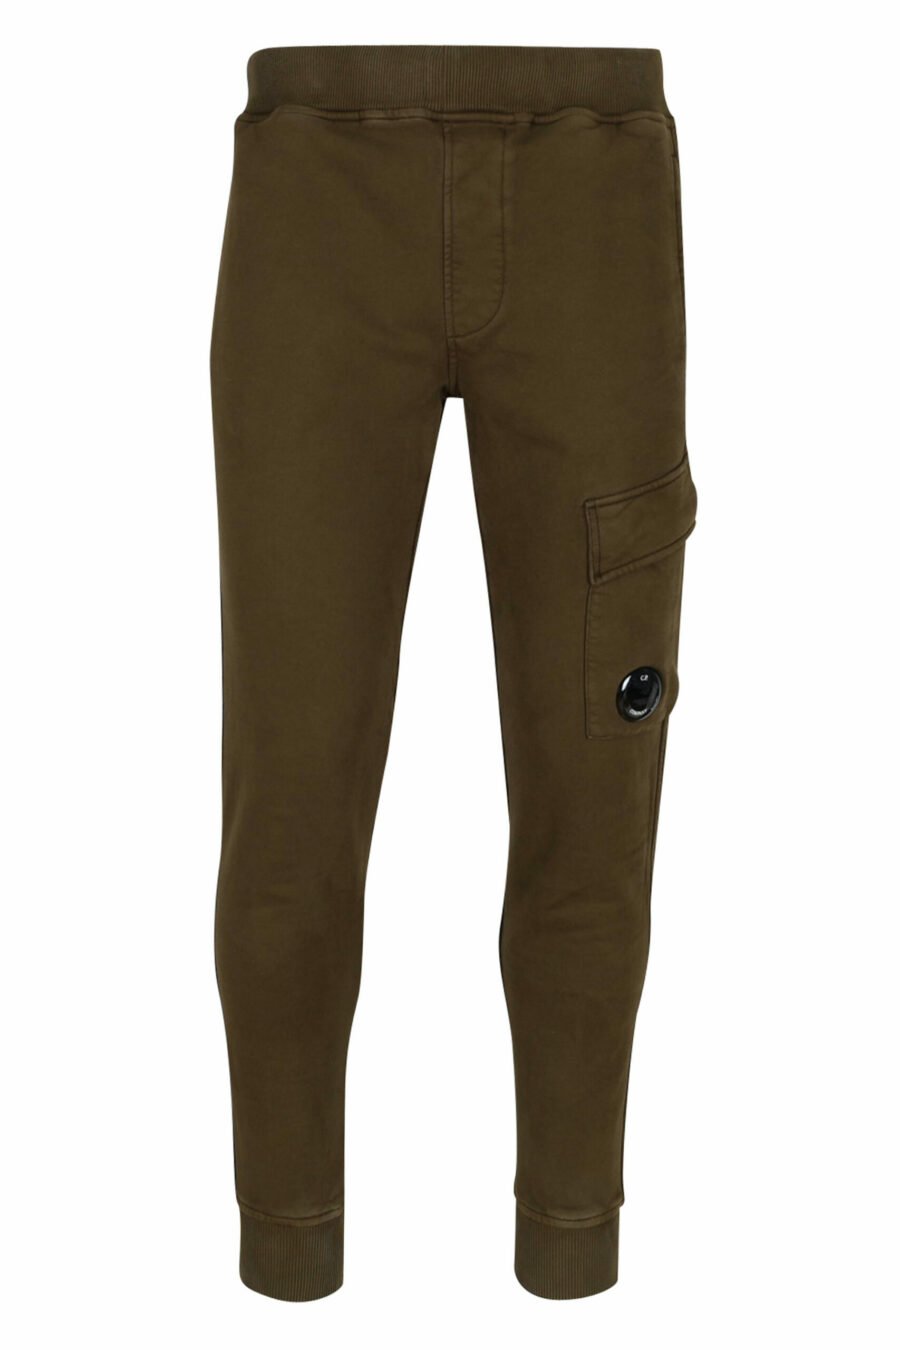 Pantalón de chándal verde militar con bolsillos laterales y logo lente - 7620943651423 scaled